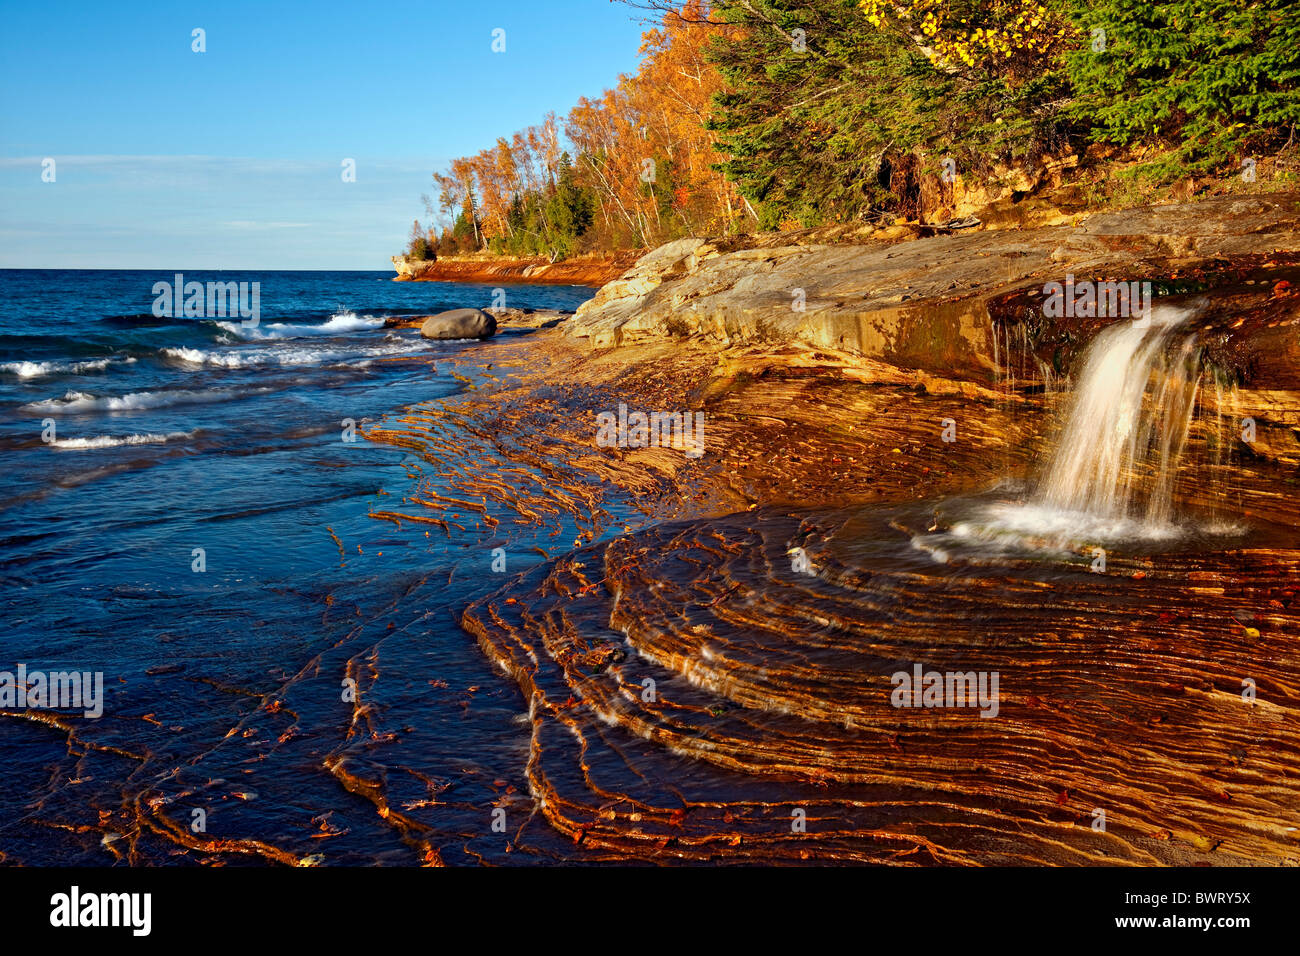 Bergleute Strand Wasserfall in der abgebildeten Rocks National Lakeshore schwappt in Lake Superior und Michigans obere Halbinsel. Stockfoto